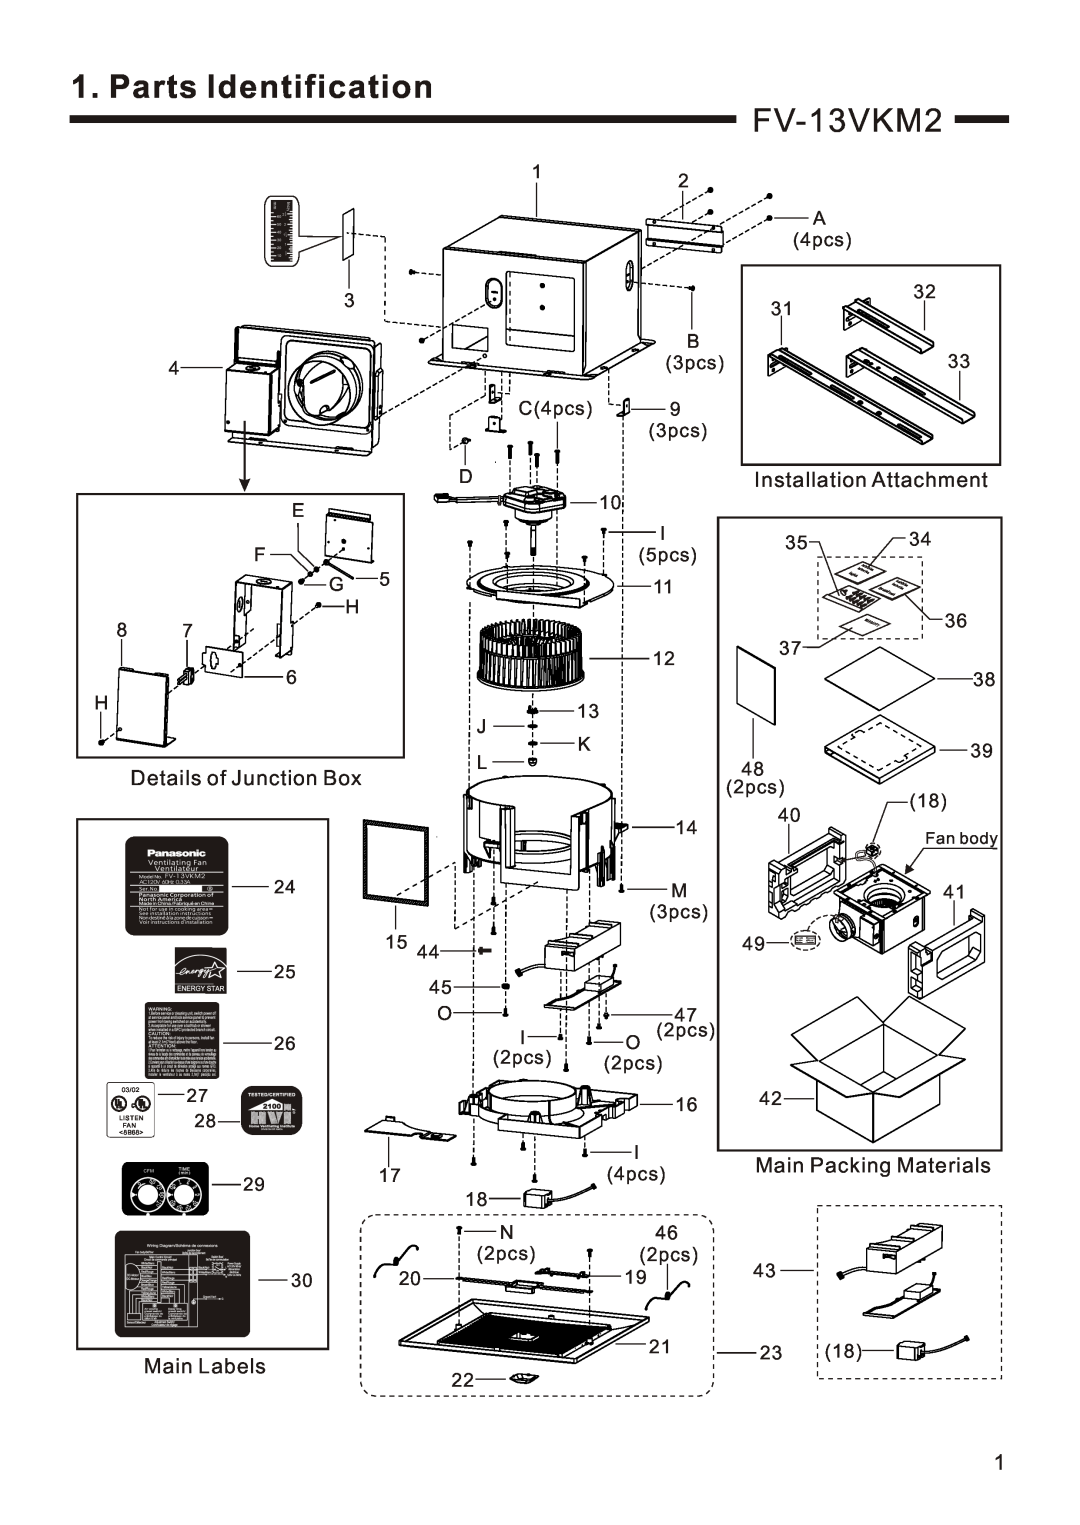 Panasonic FV-13VKS2 Parts Identification, FV-13VKM2, Installation Attachment, Details of Junction Box, Main Labels 